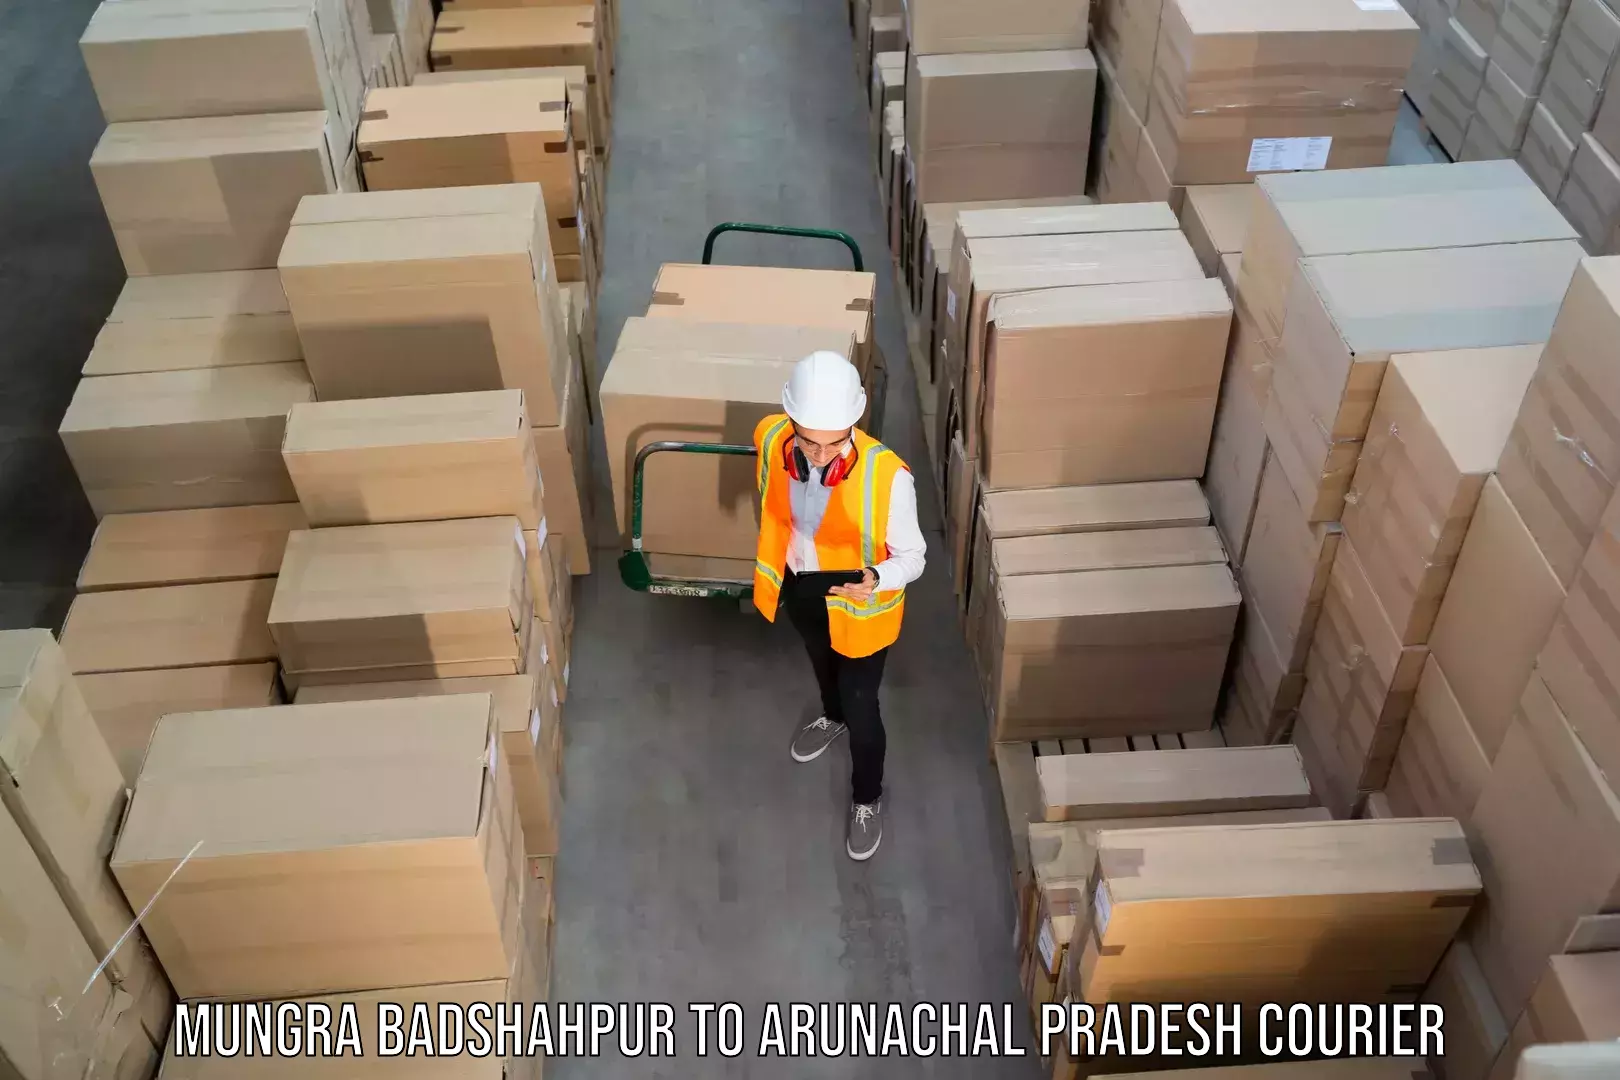 State-of-the-art courier technology Mungra Badshahpur to Deomali